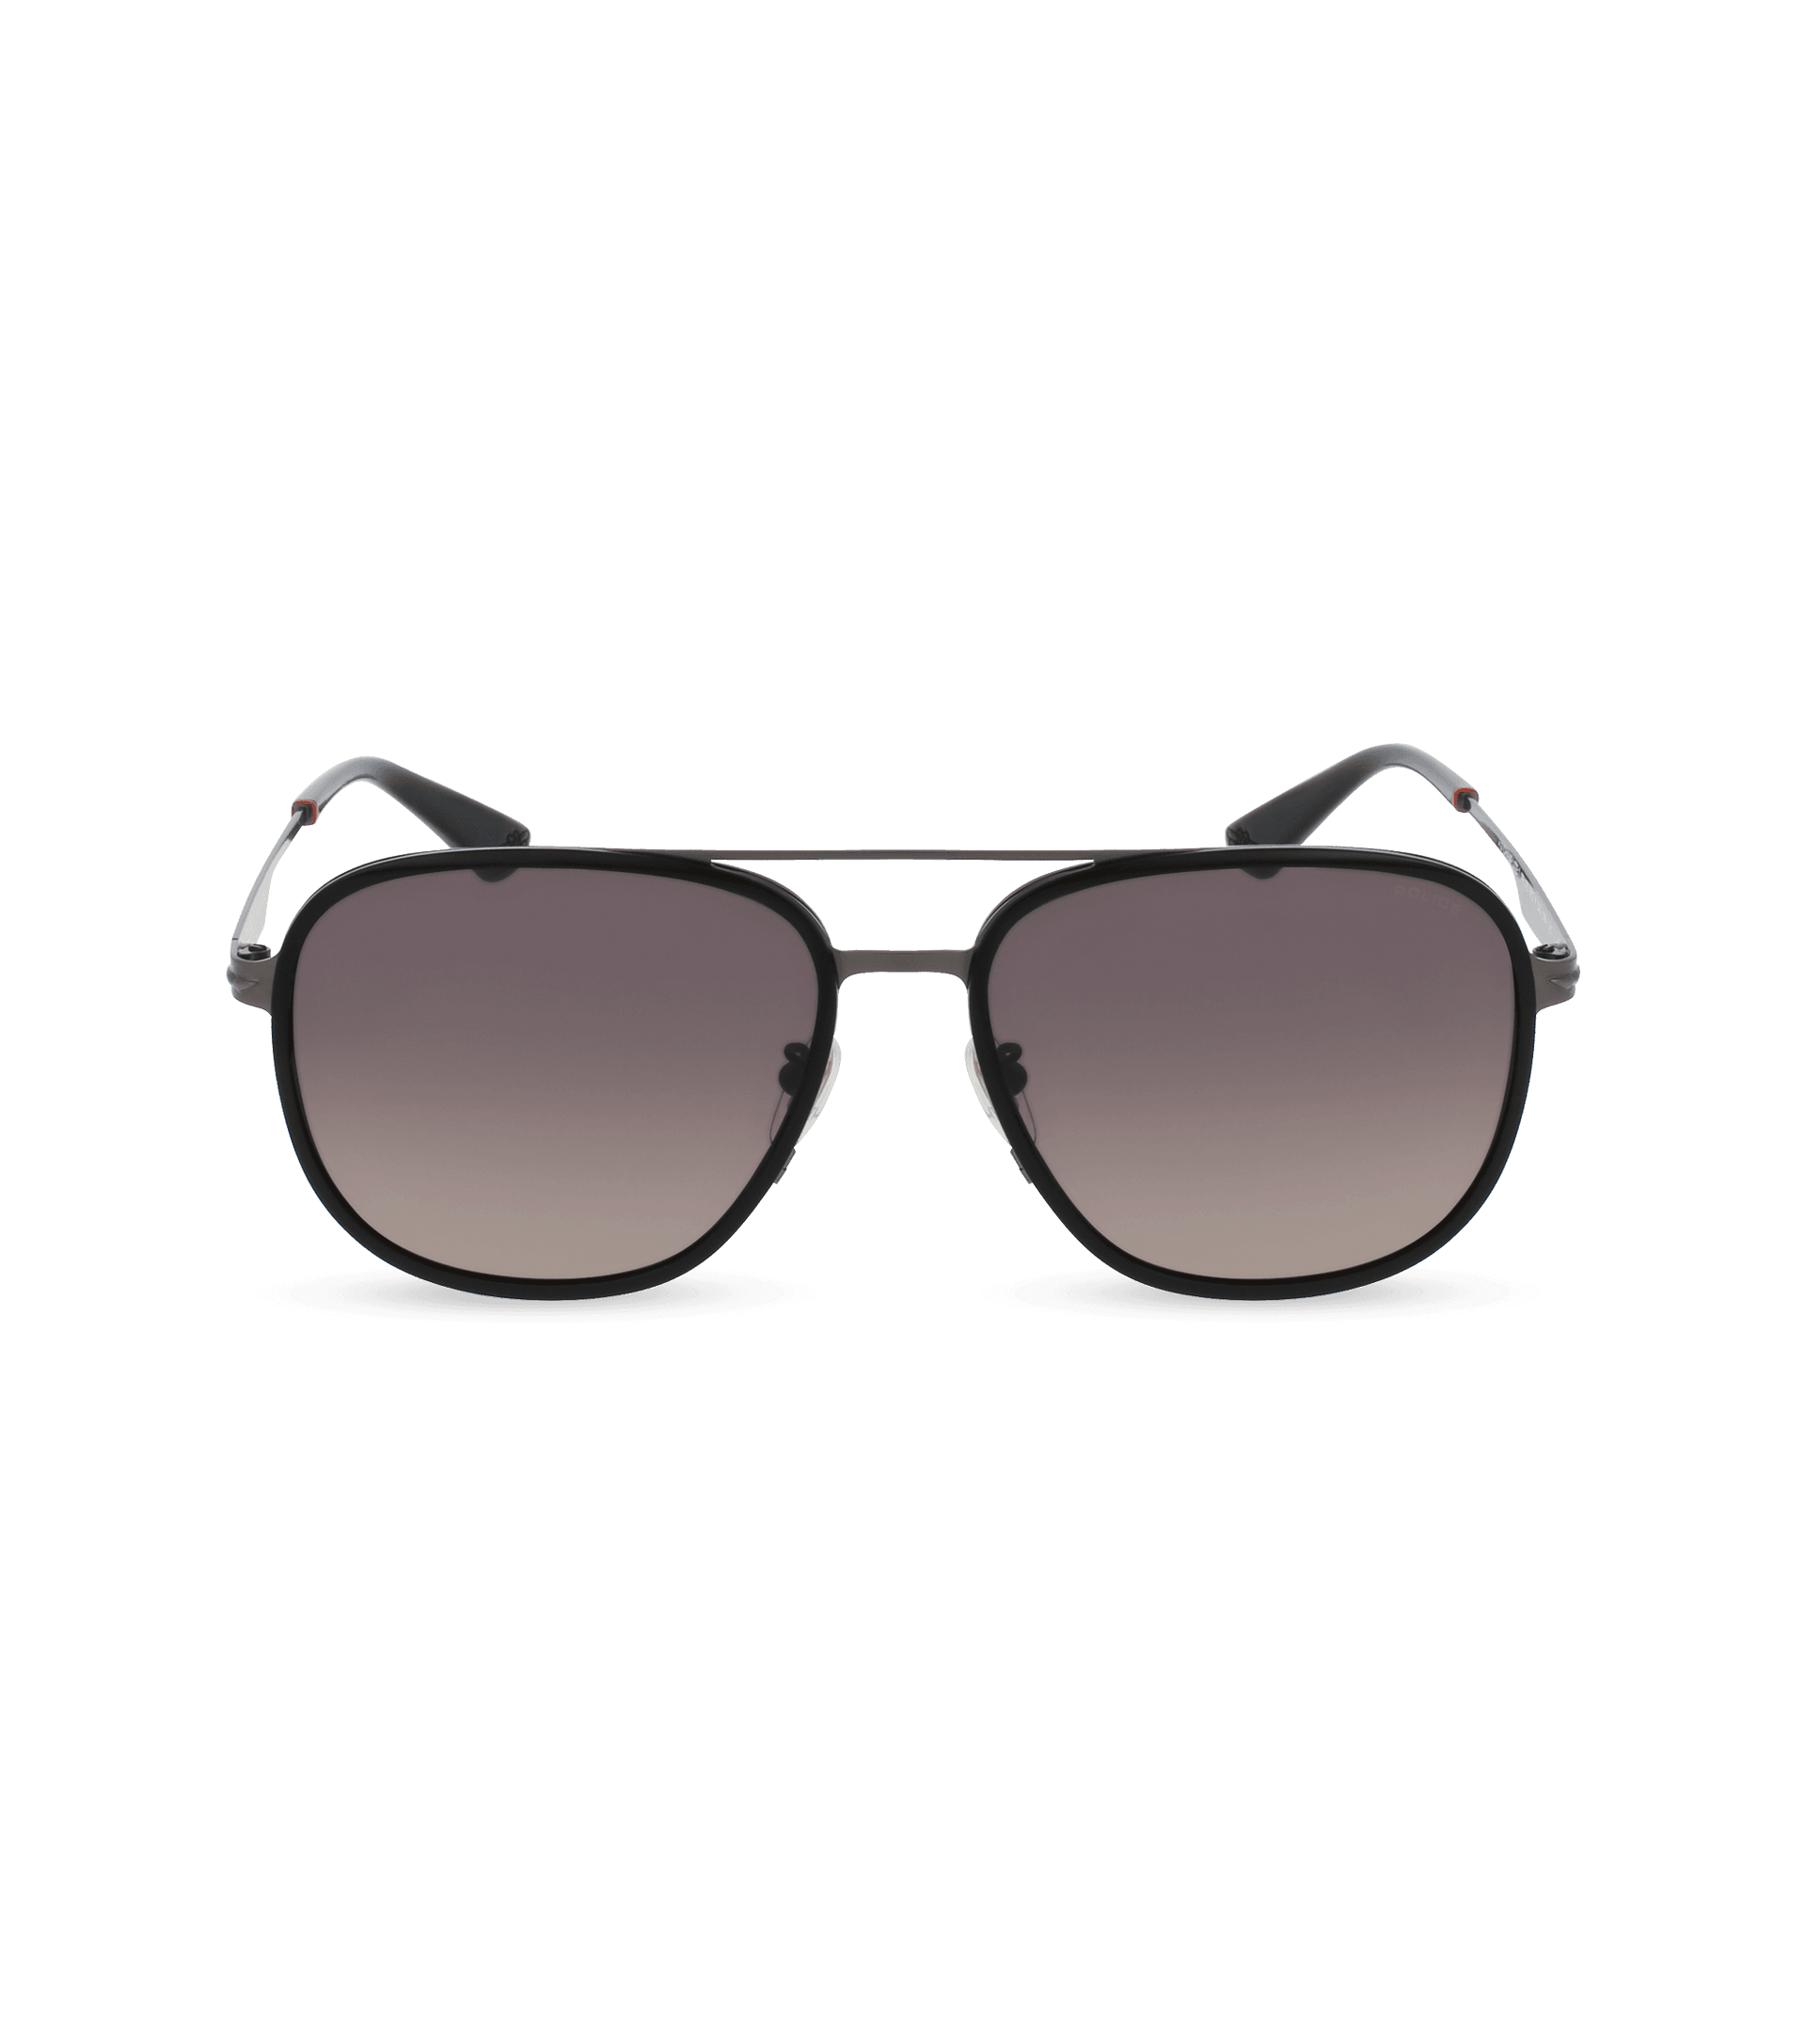 Police sunglasses - Champ 10 Man Sunglasses Police SPLN36 Grey, Brown